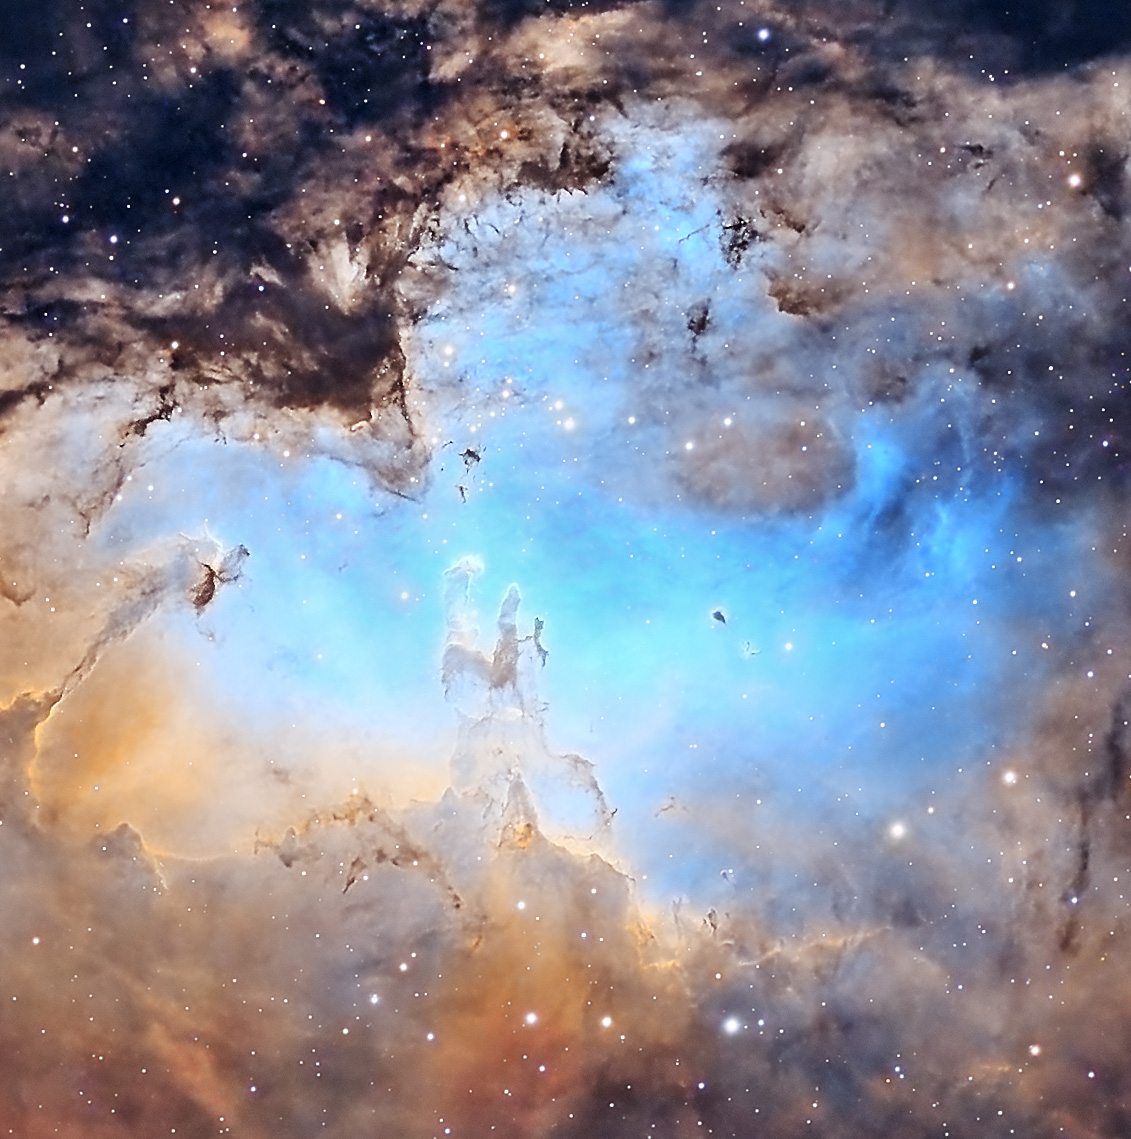 The Pillars of Creation inside the Eagle Nebula (m16)